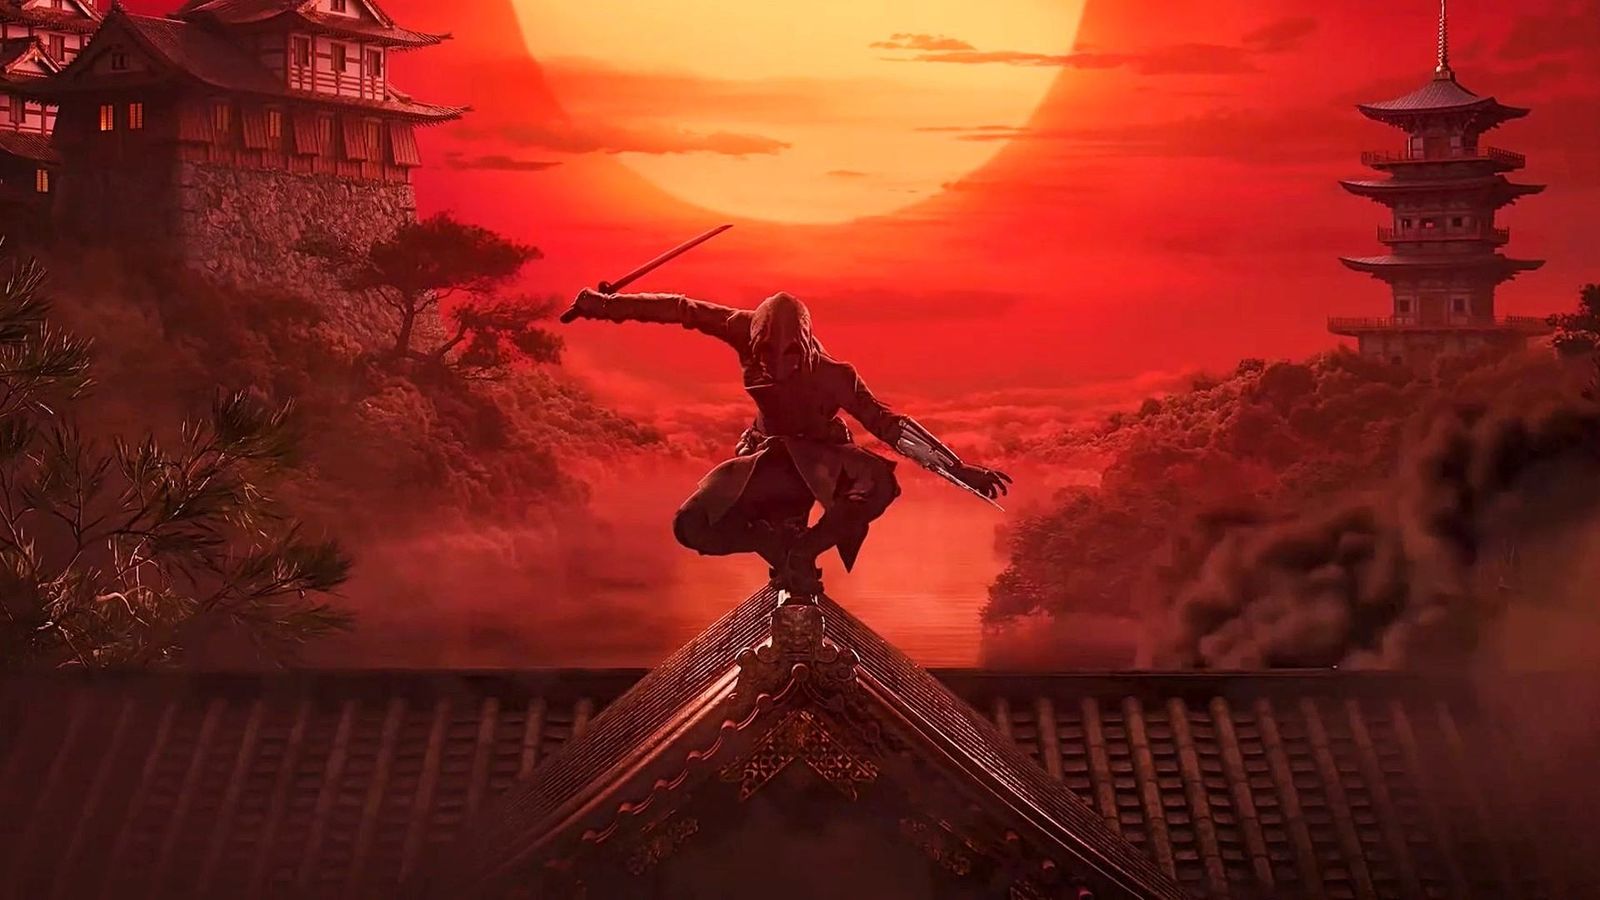 Assassin's Creed Shadows keyart showing a Samurai balancing on an Japanese house